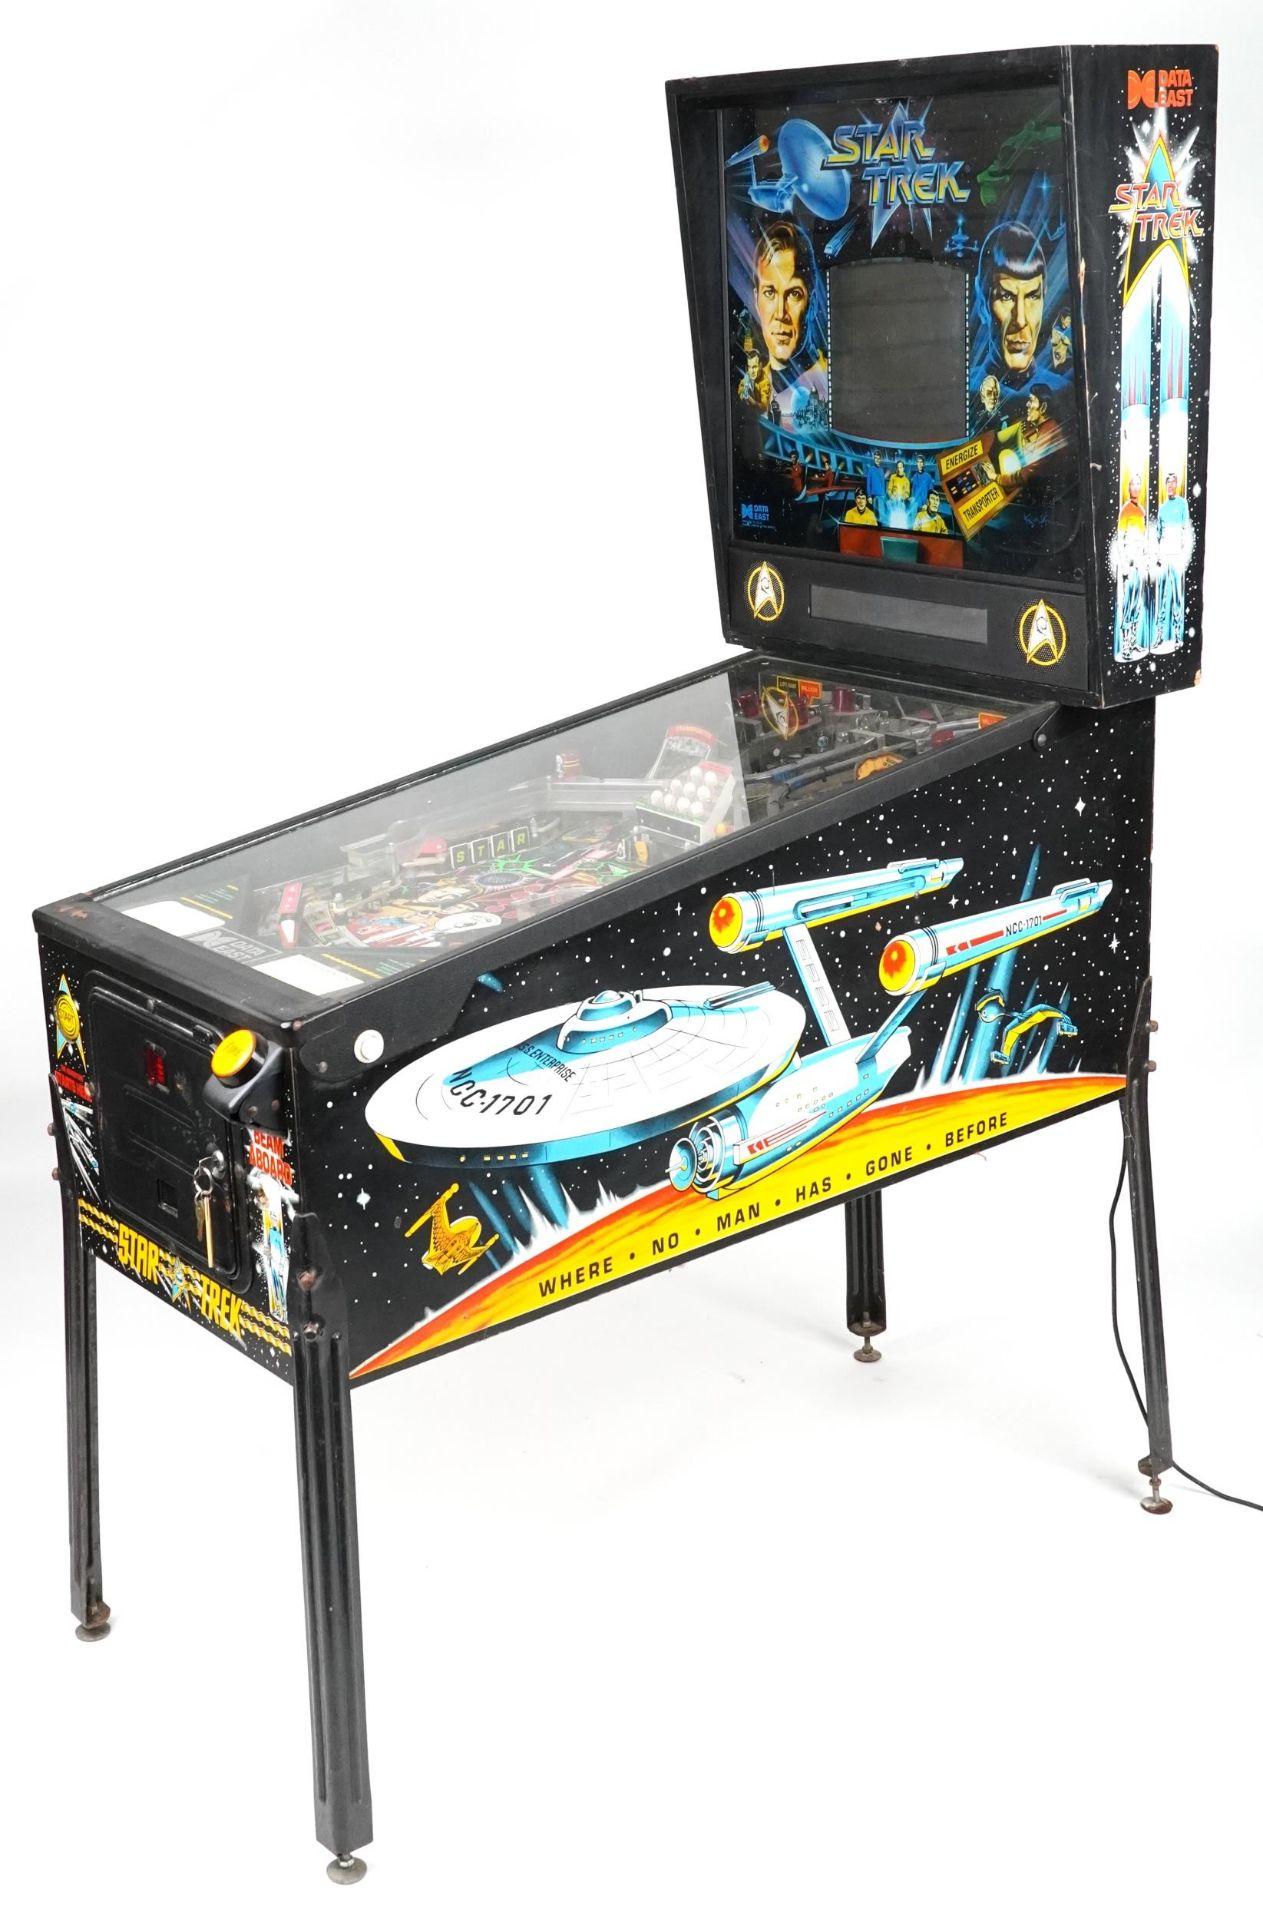 Vintage Star Trek pinball machine by Data East, 193cm H x 71cm W x 136cm D